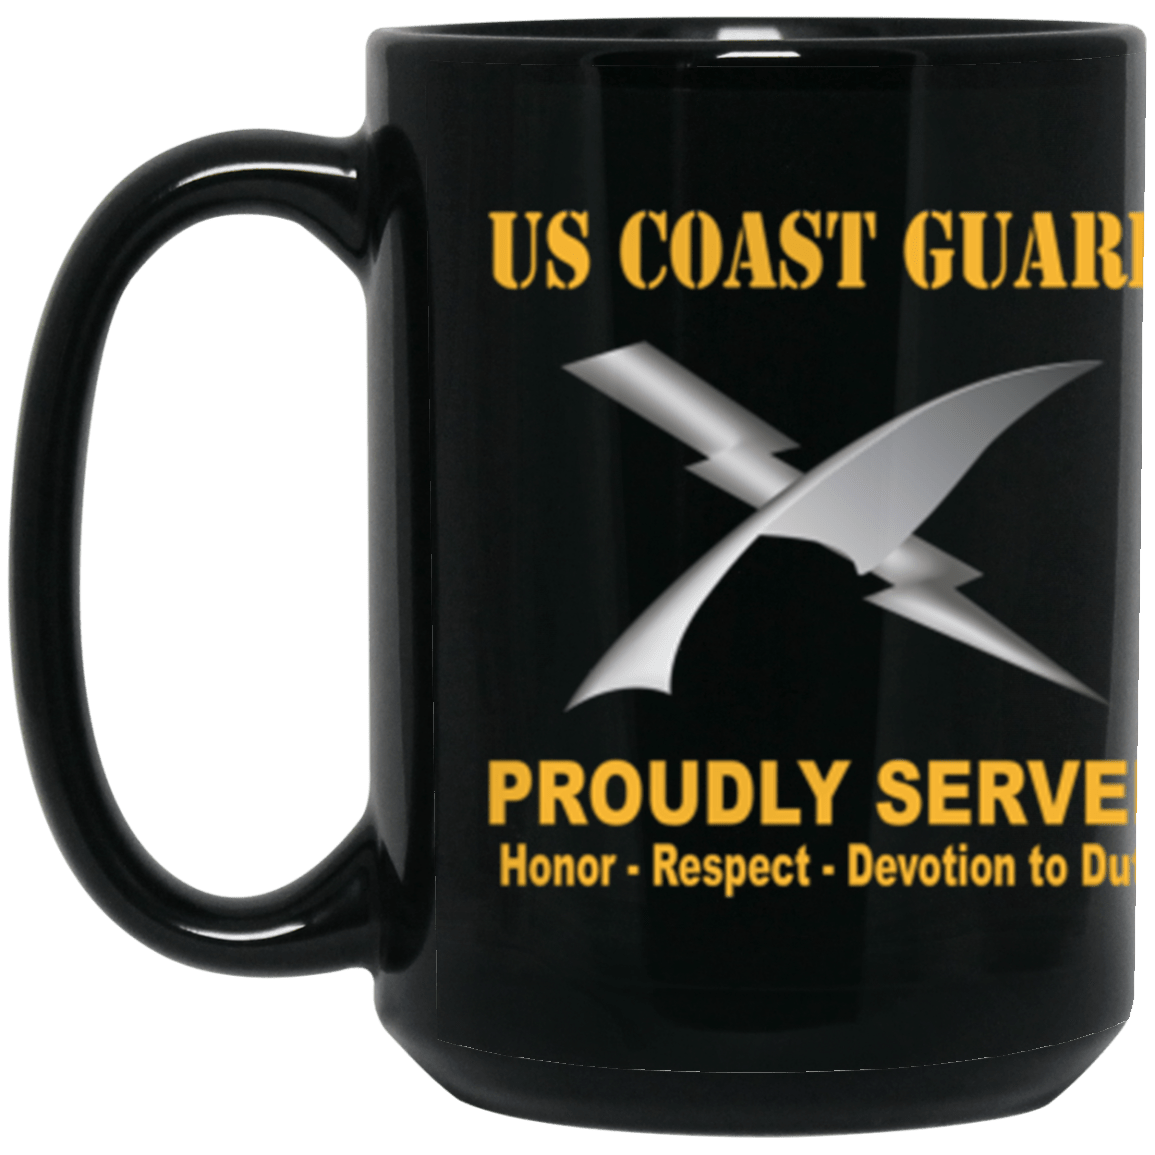 USCG Intelligence Specialist IS Logo Proudly Served Core Values 15 oz. Black Mug-Drinkware-Veterans Nation